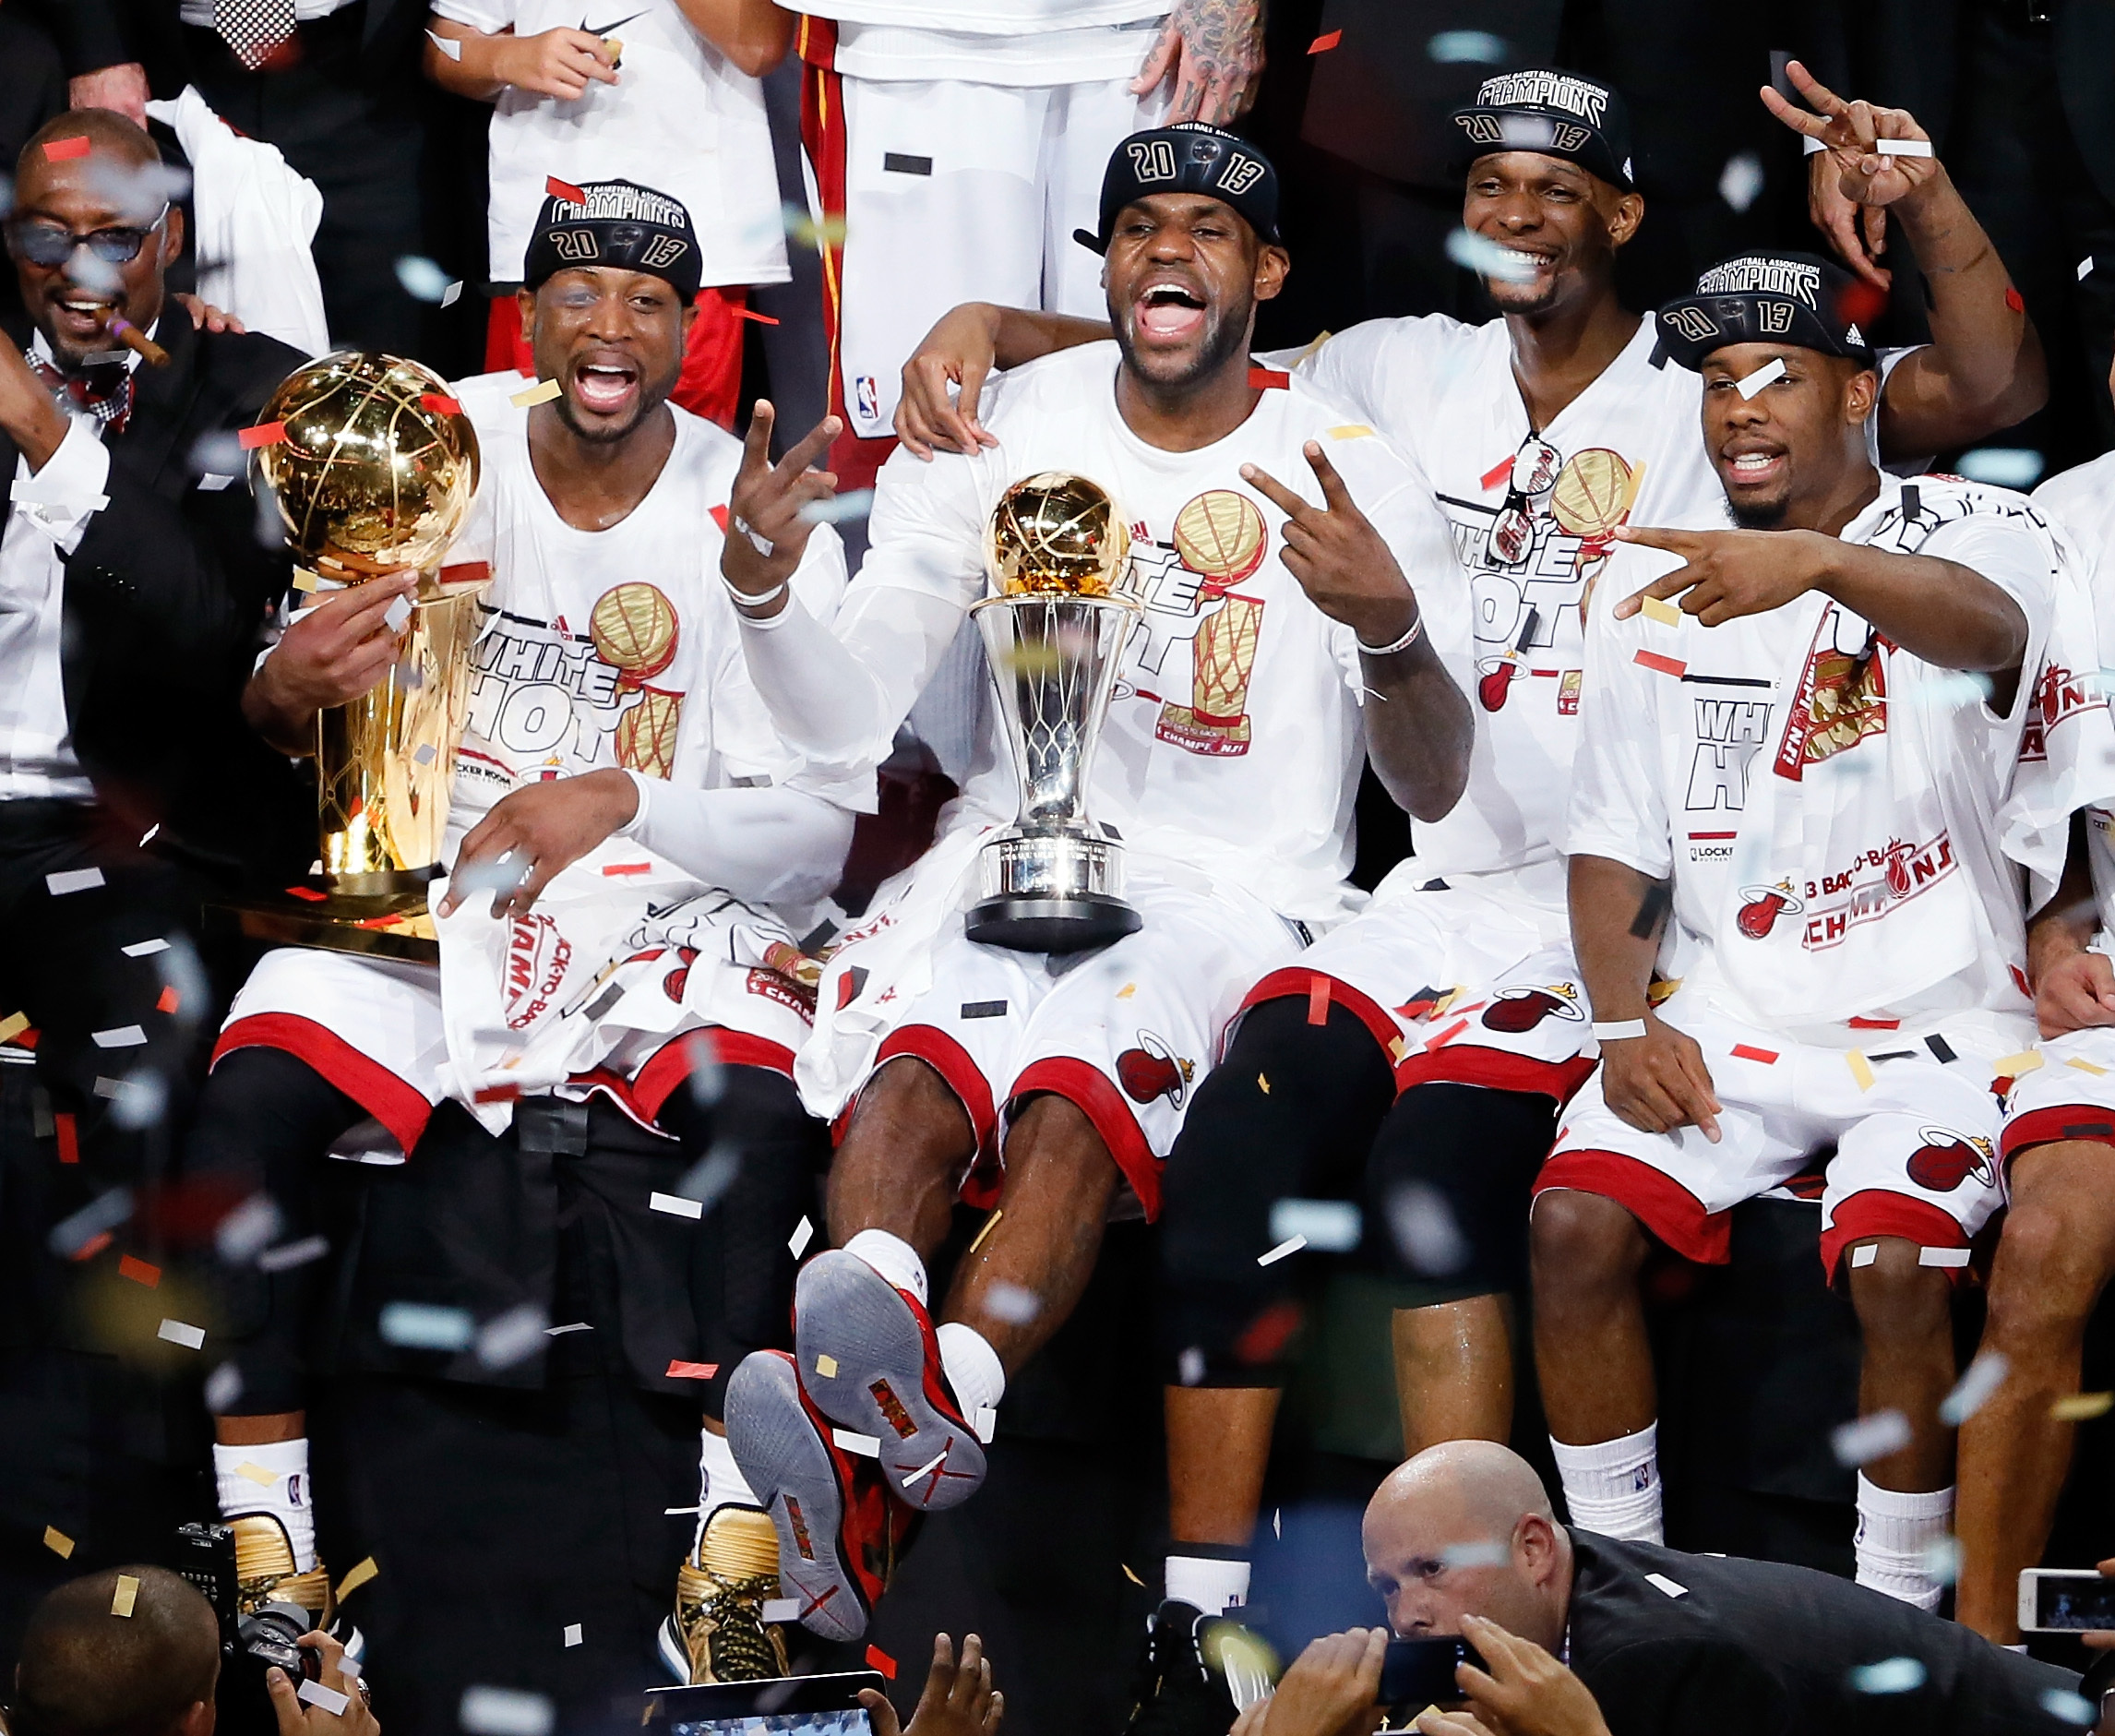 Heat beat Spurs 9588 to win 2nd consecutive NBA championship CBS News